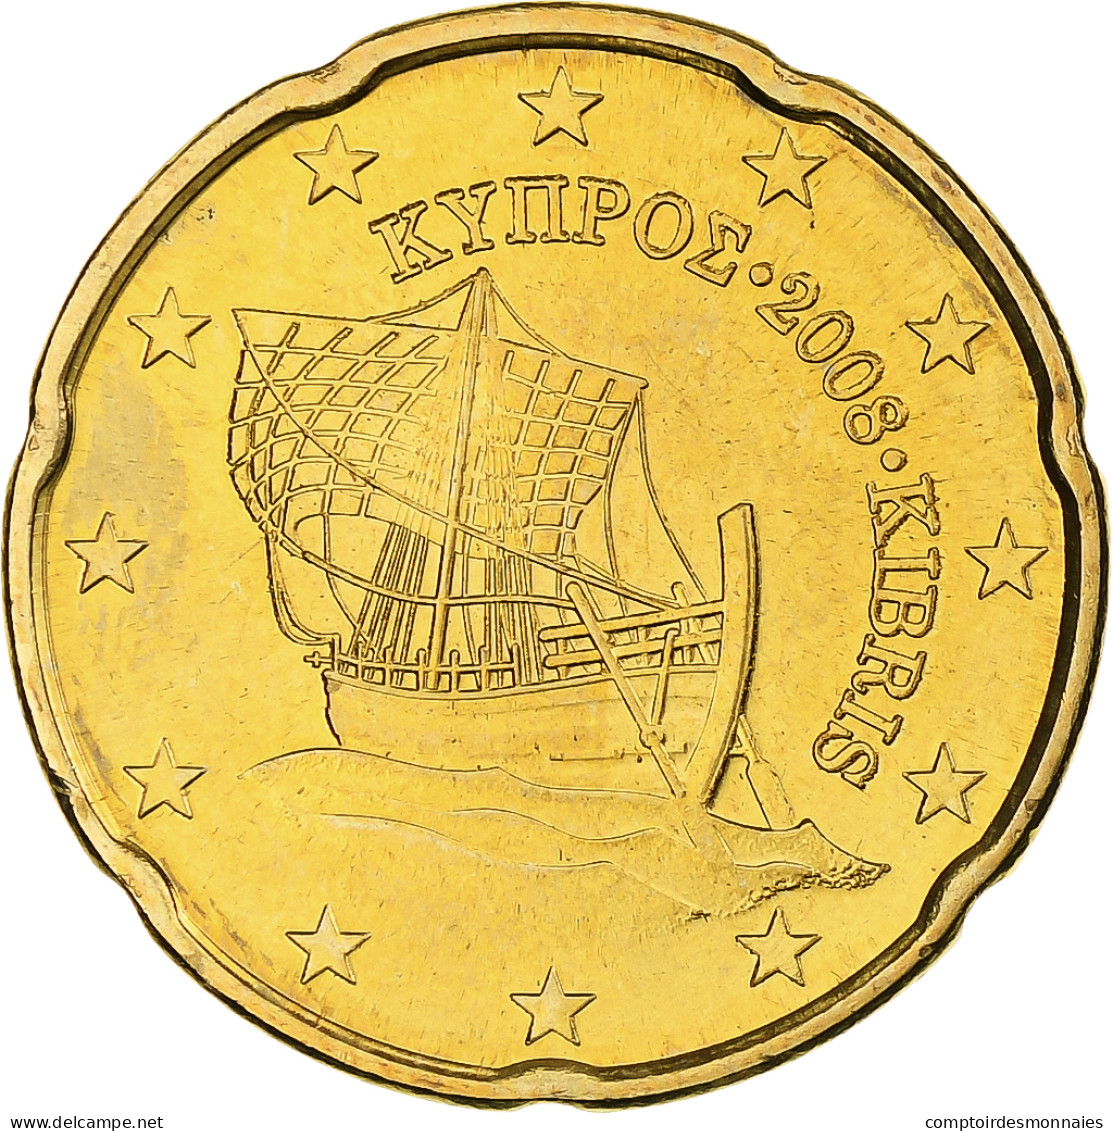 Chypre, 20 Euro Cent, 2008, BU, FDC, Or Nordique, KM:82 - Cipro